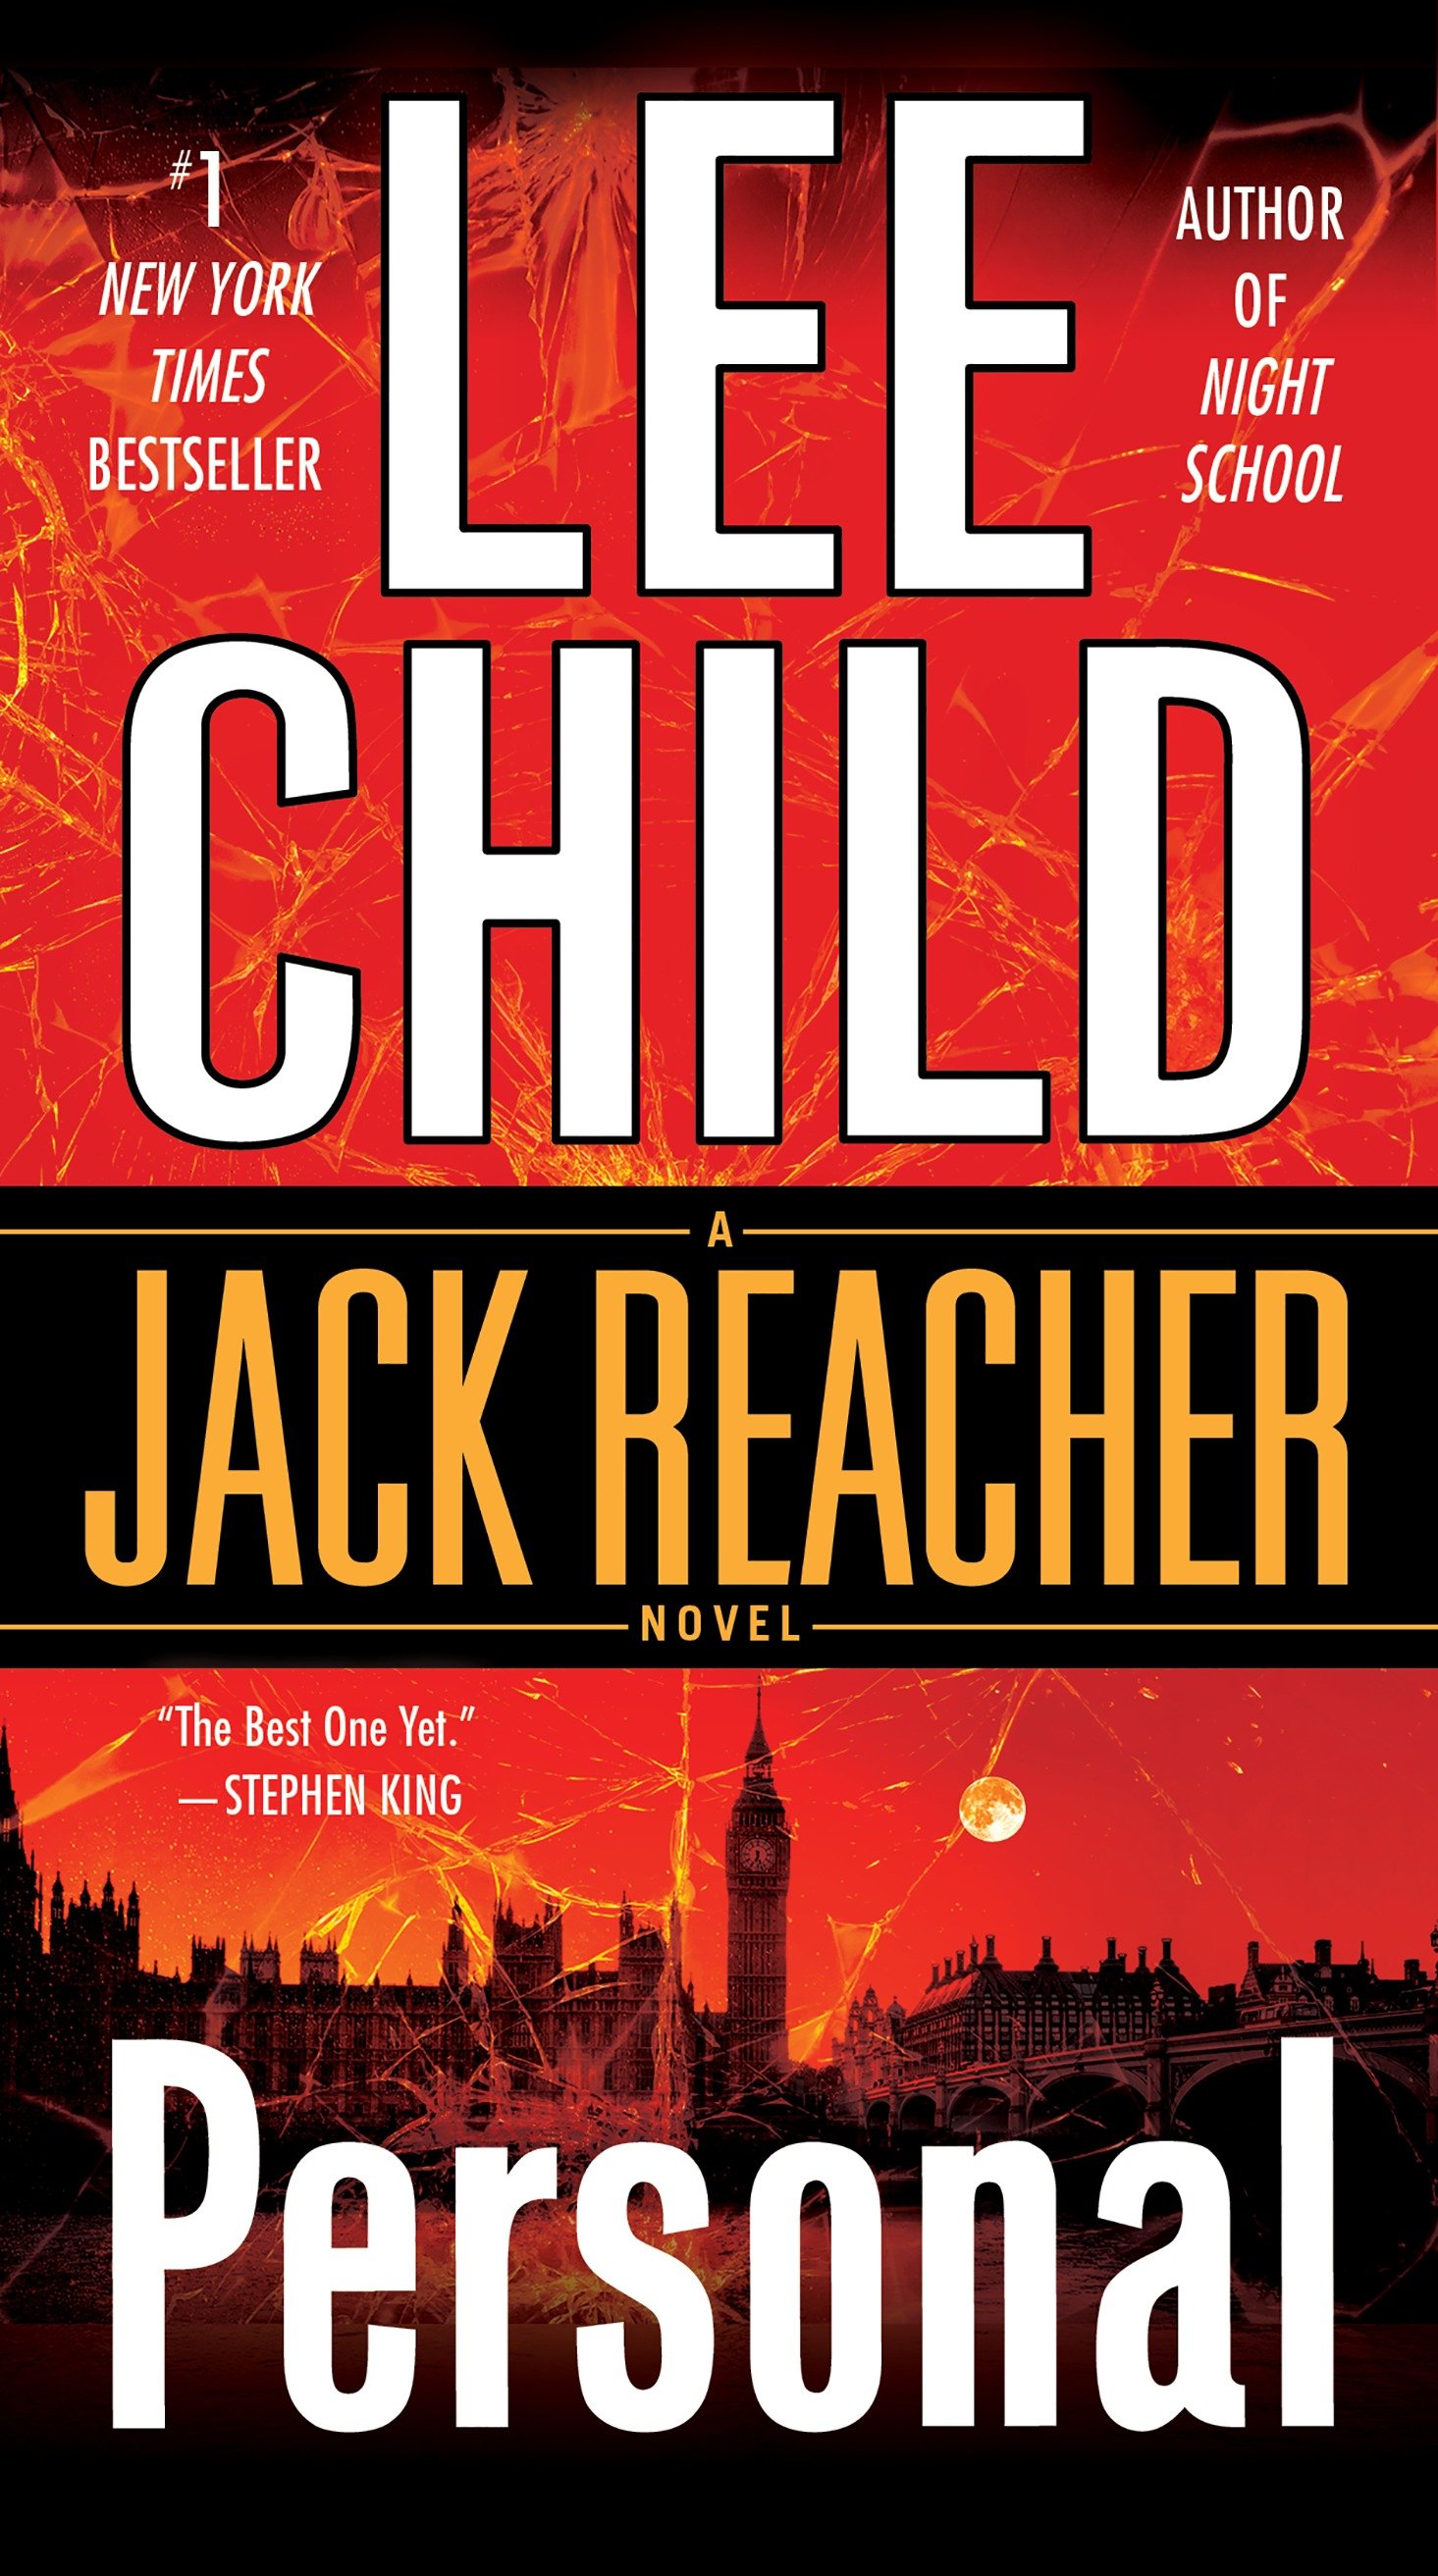 Personal a Jack Reacher novel cover image